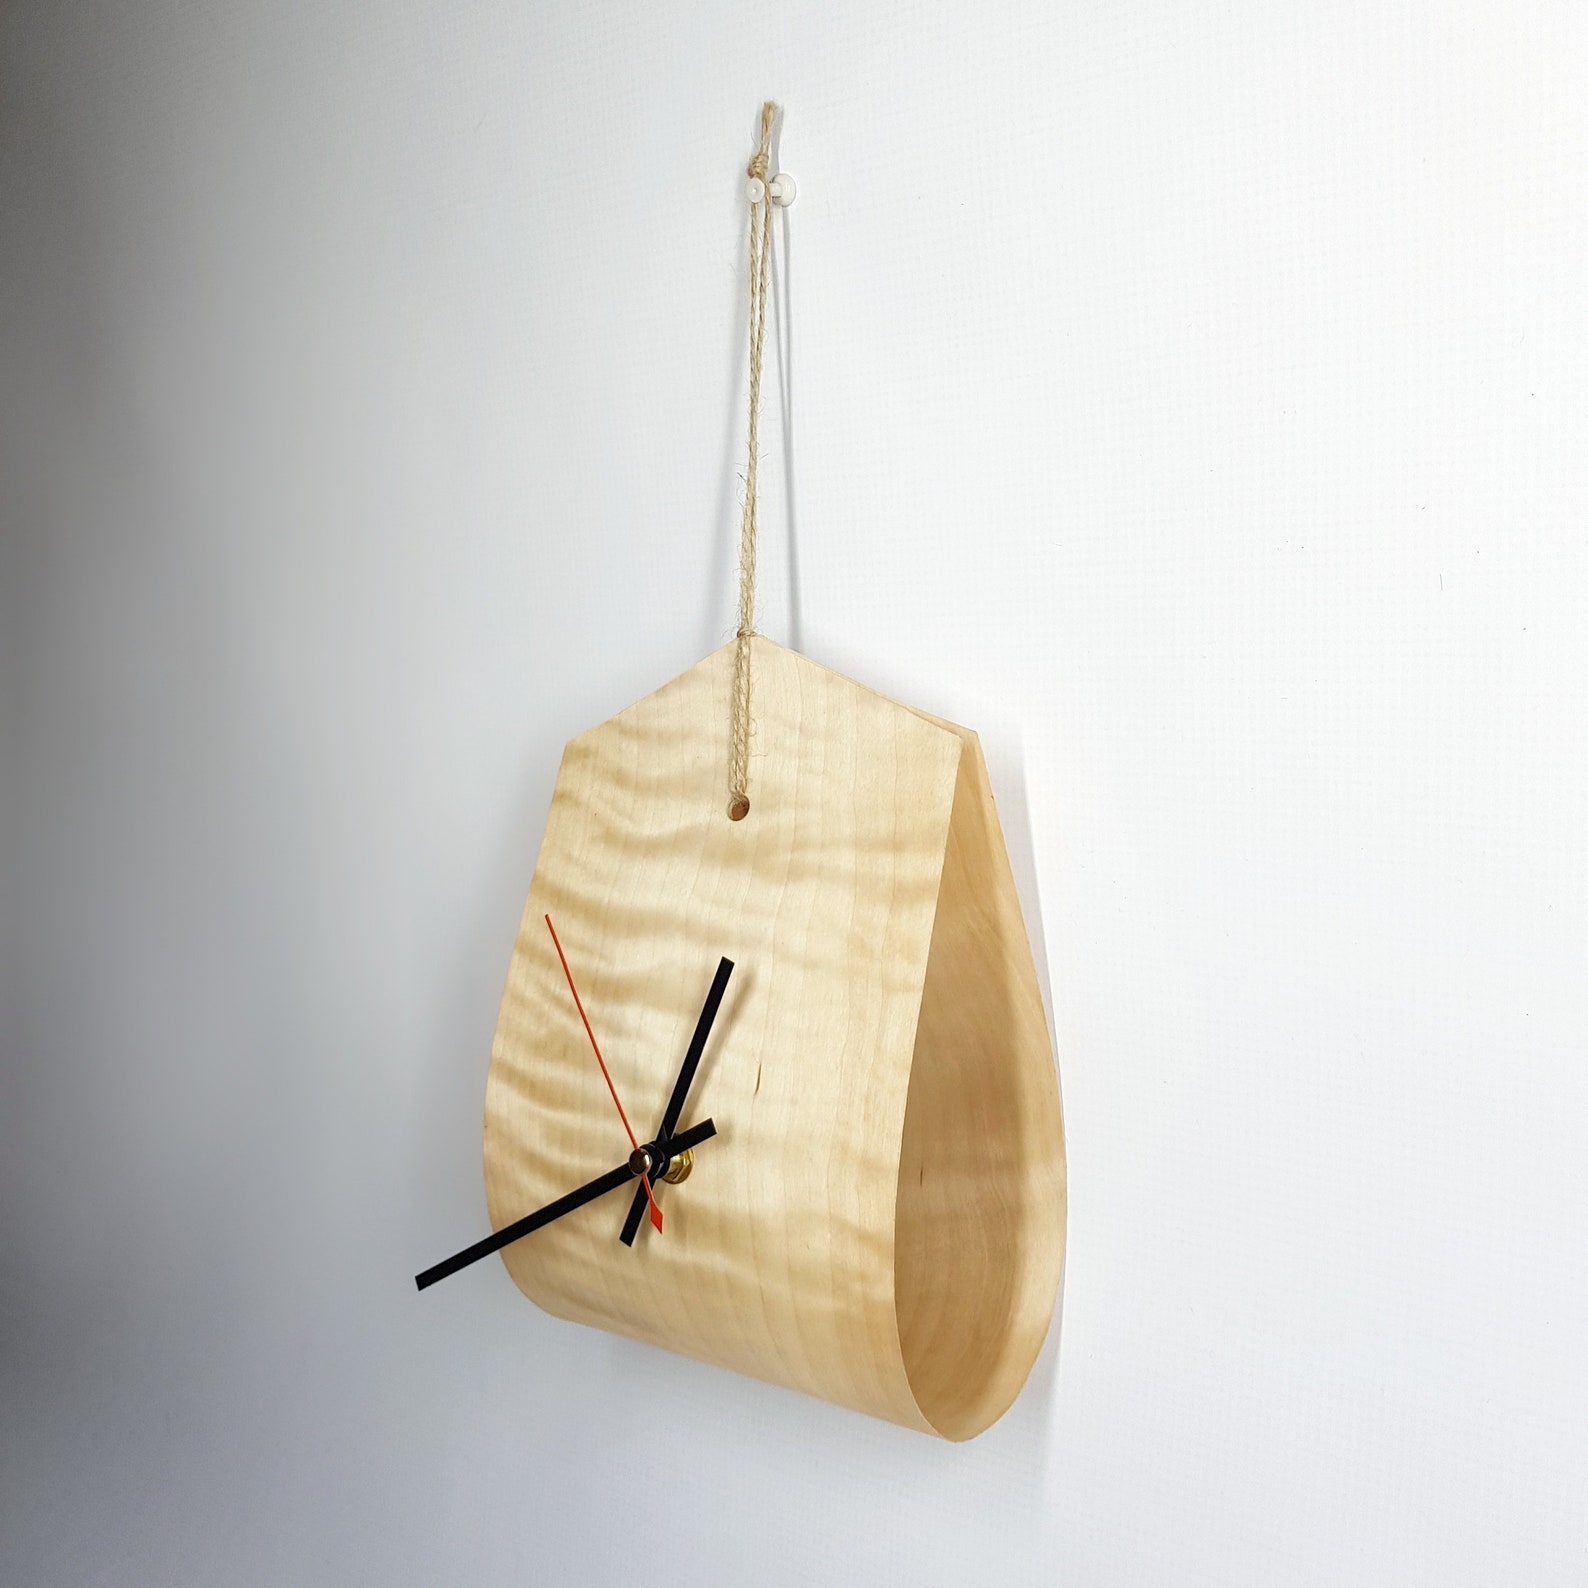 Minimalist Wood Clock